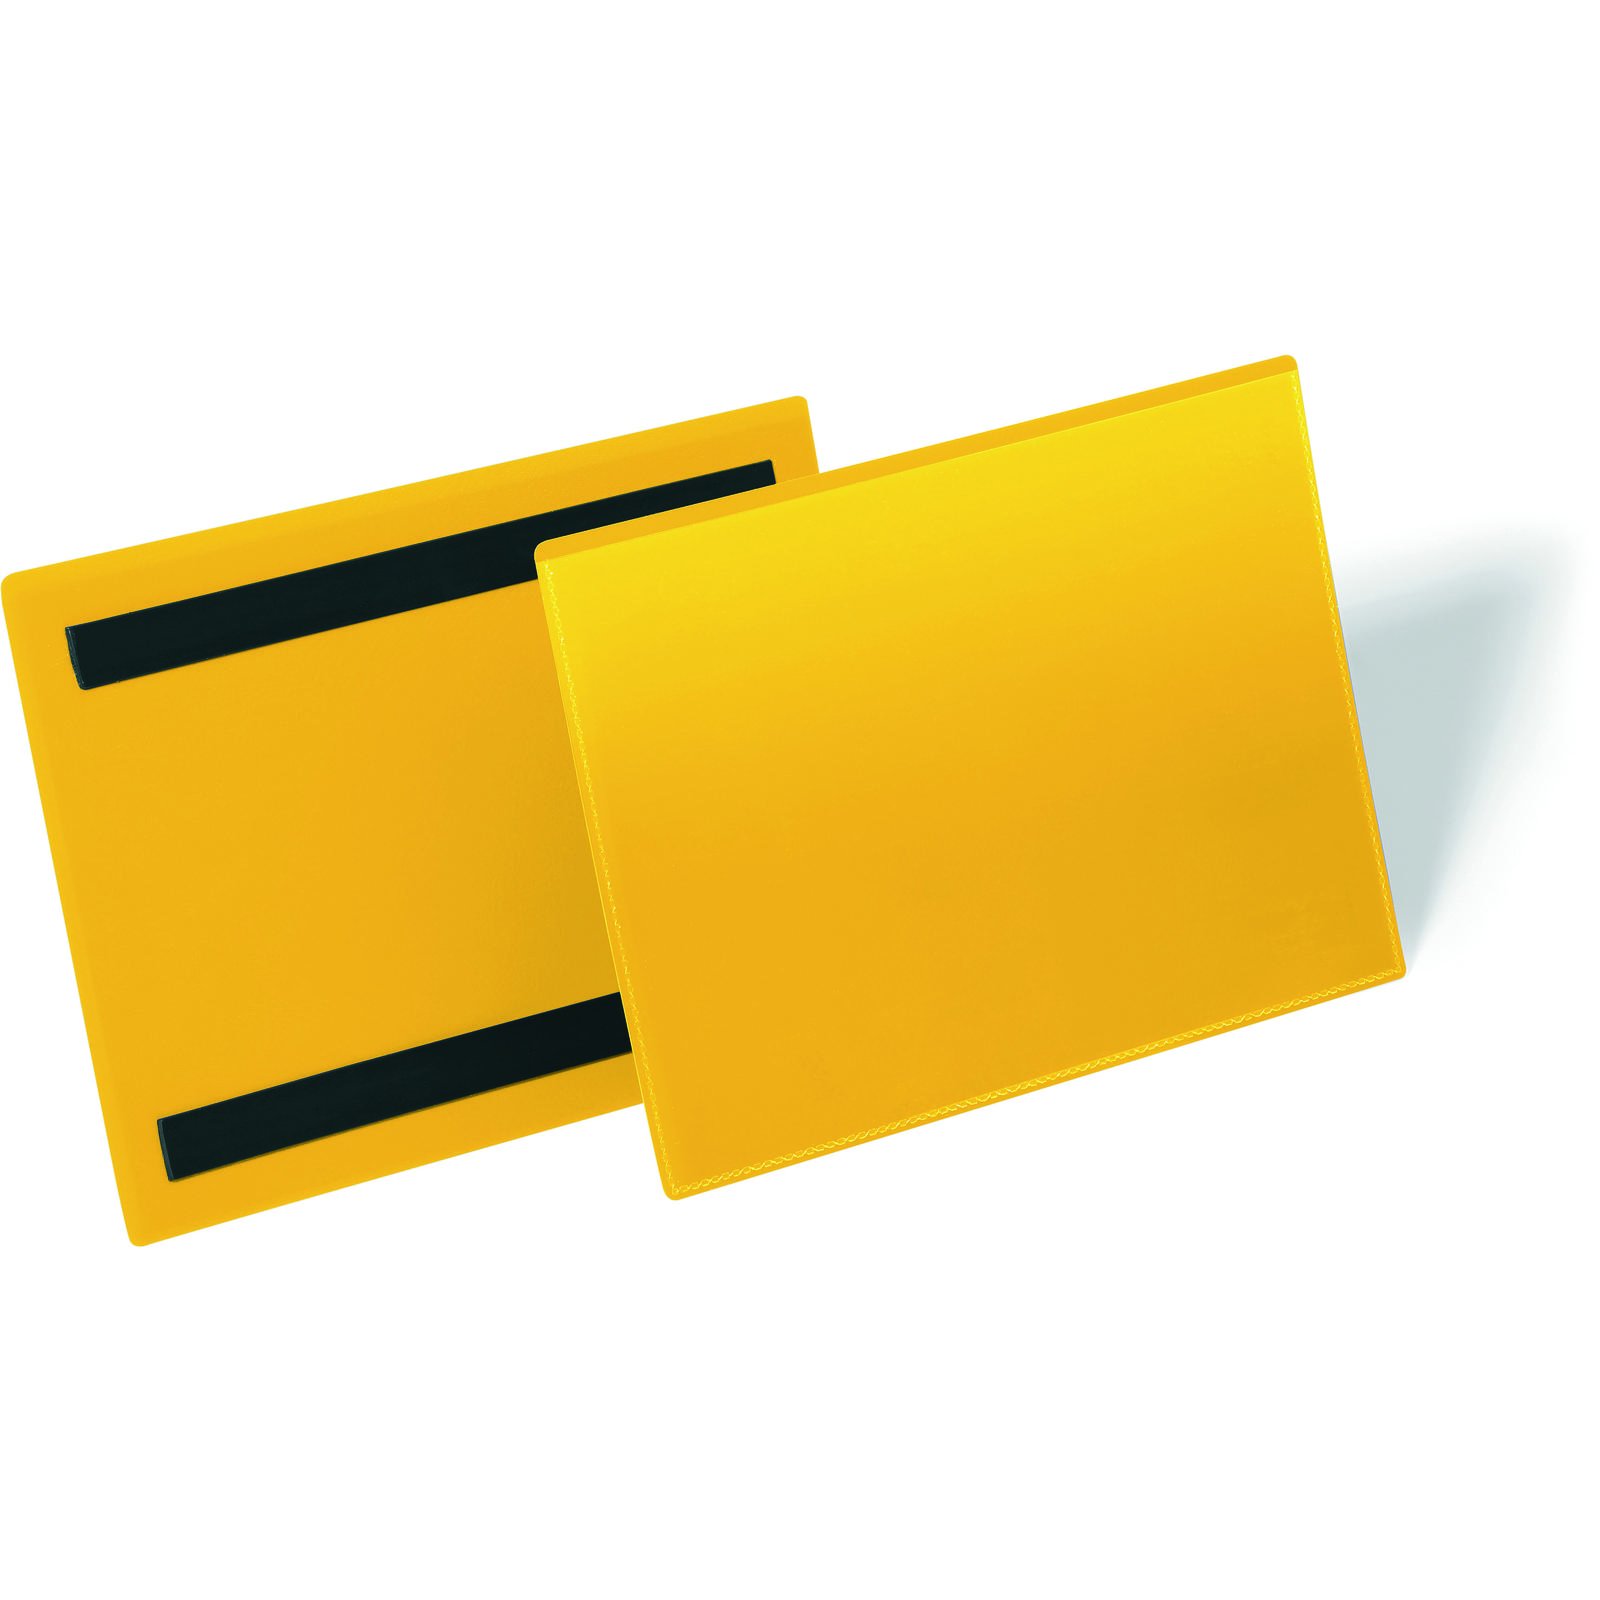 Durable lagerlomme m/magnet A5 tværformat gul